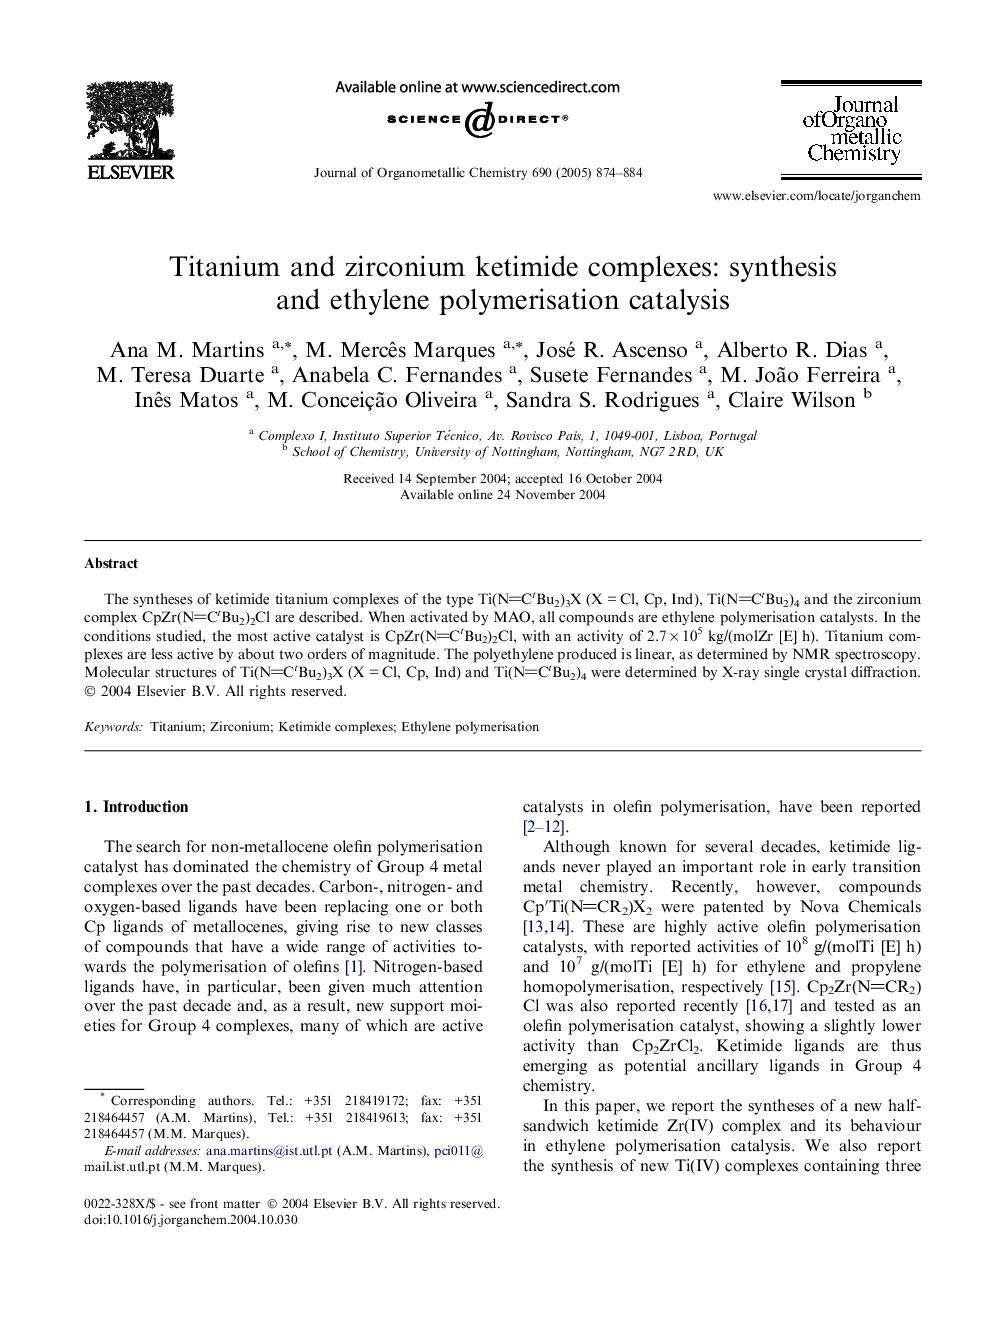 Titanium and zirconium ketimide complexes: synthesis and ethylene polymerisation catalysis